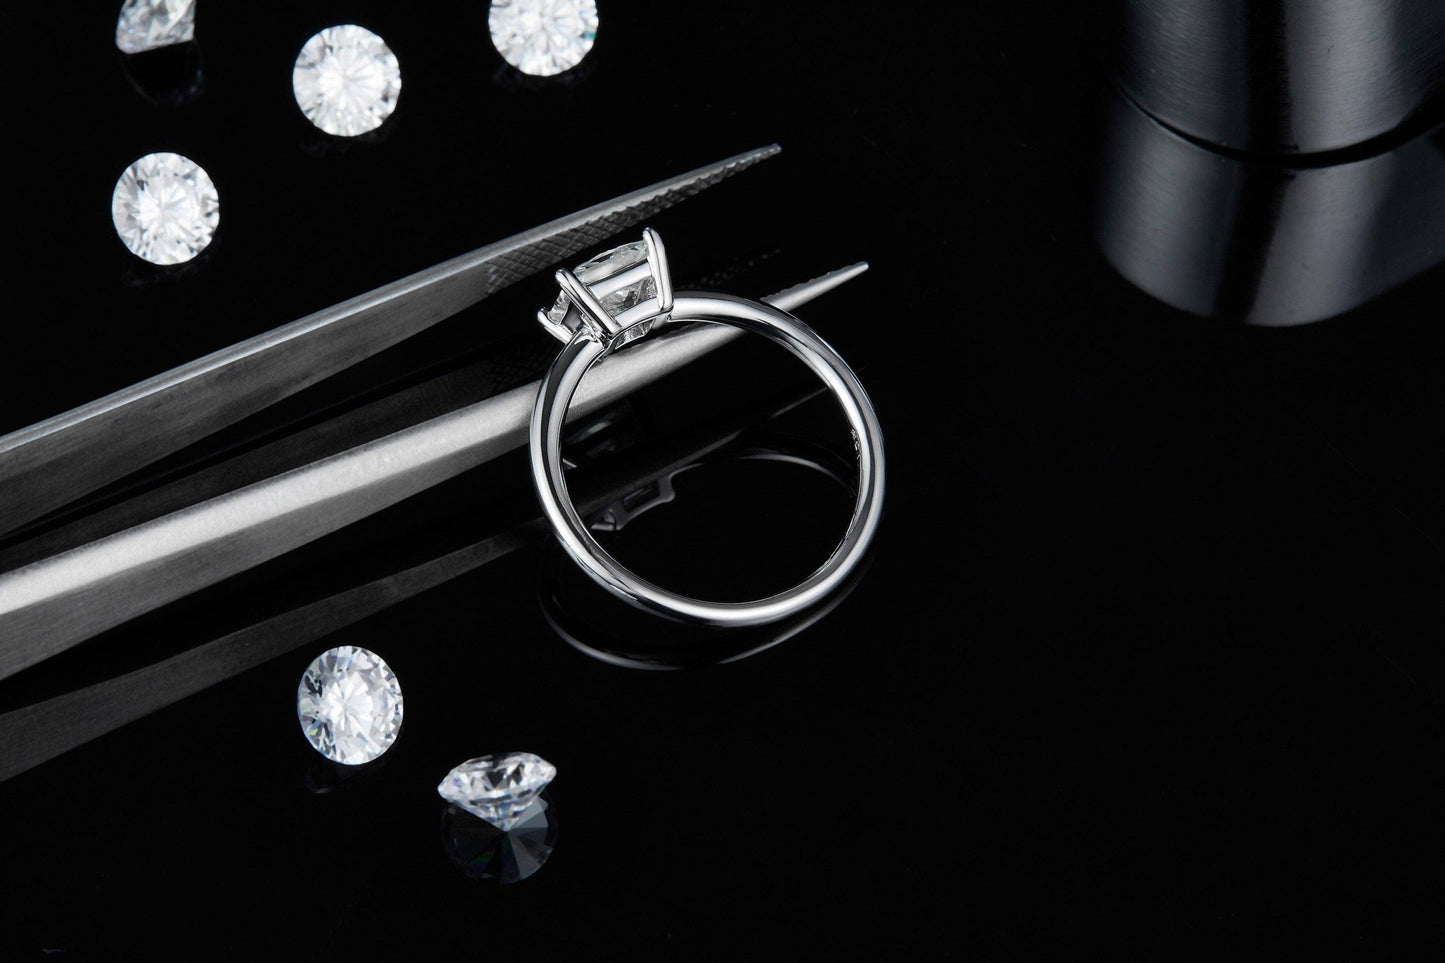 1.0Ct 5.5mm Cushion Brilliant Moissanite Solitaire Engagement Ring-Black Diamonds New York